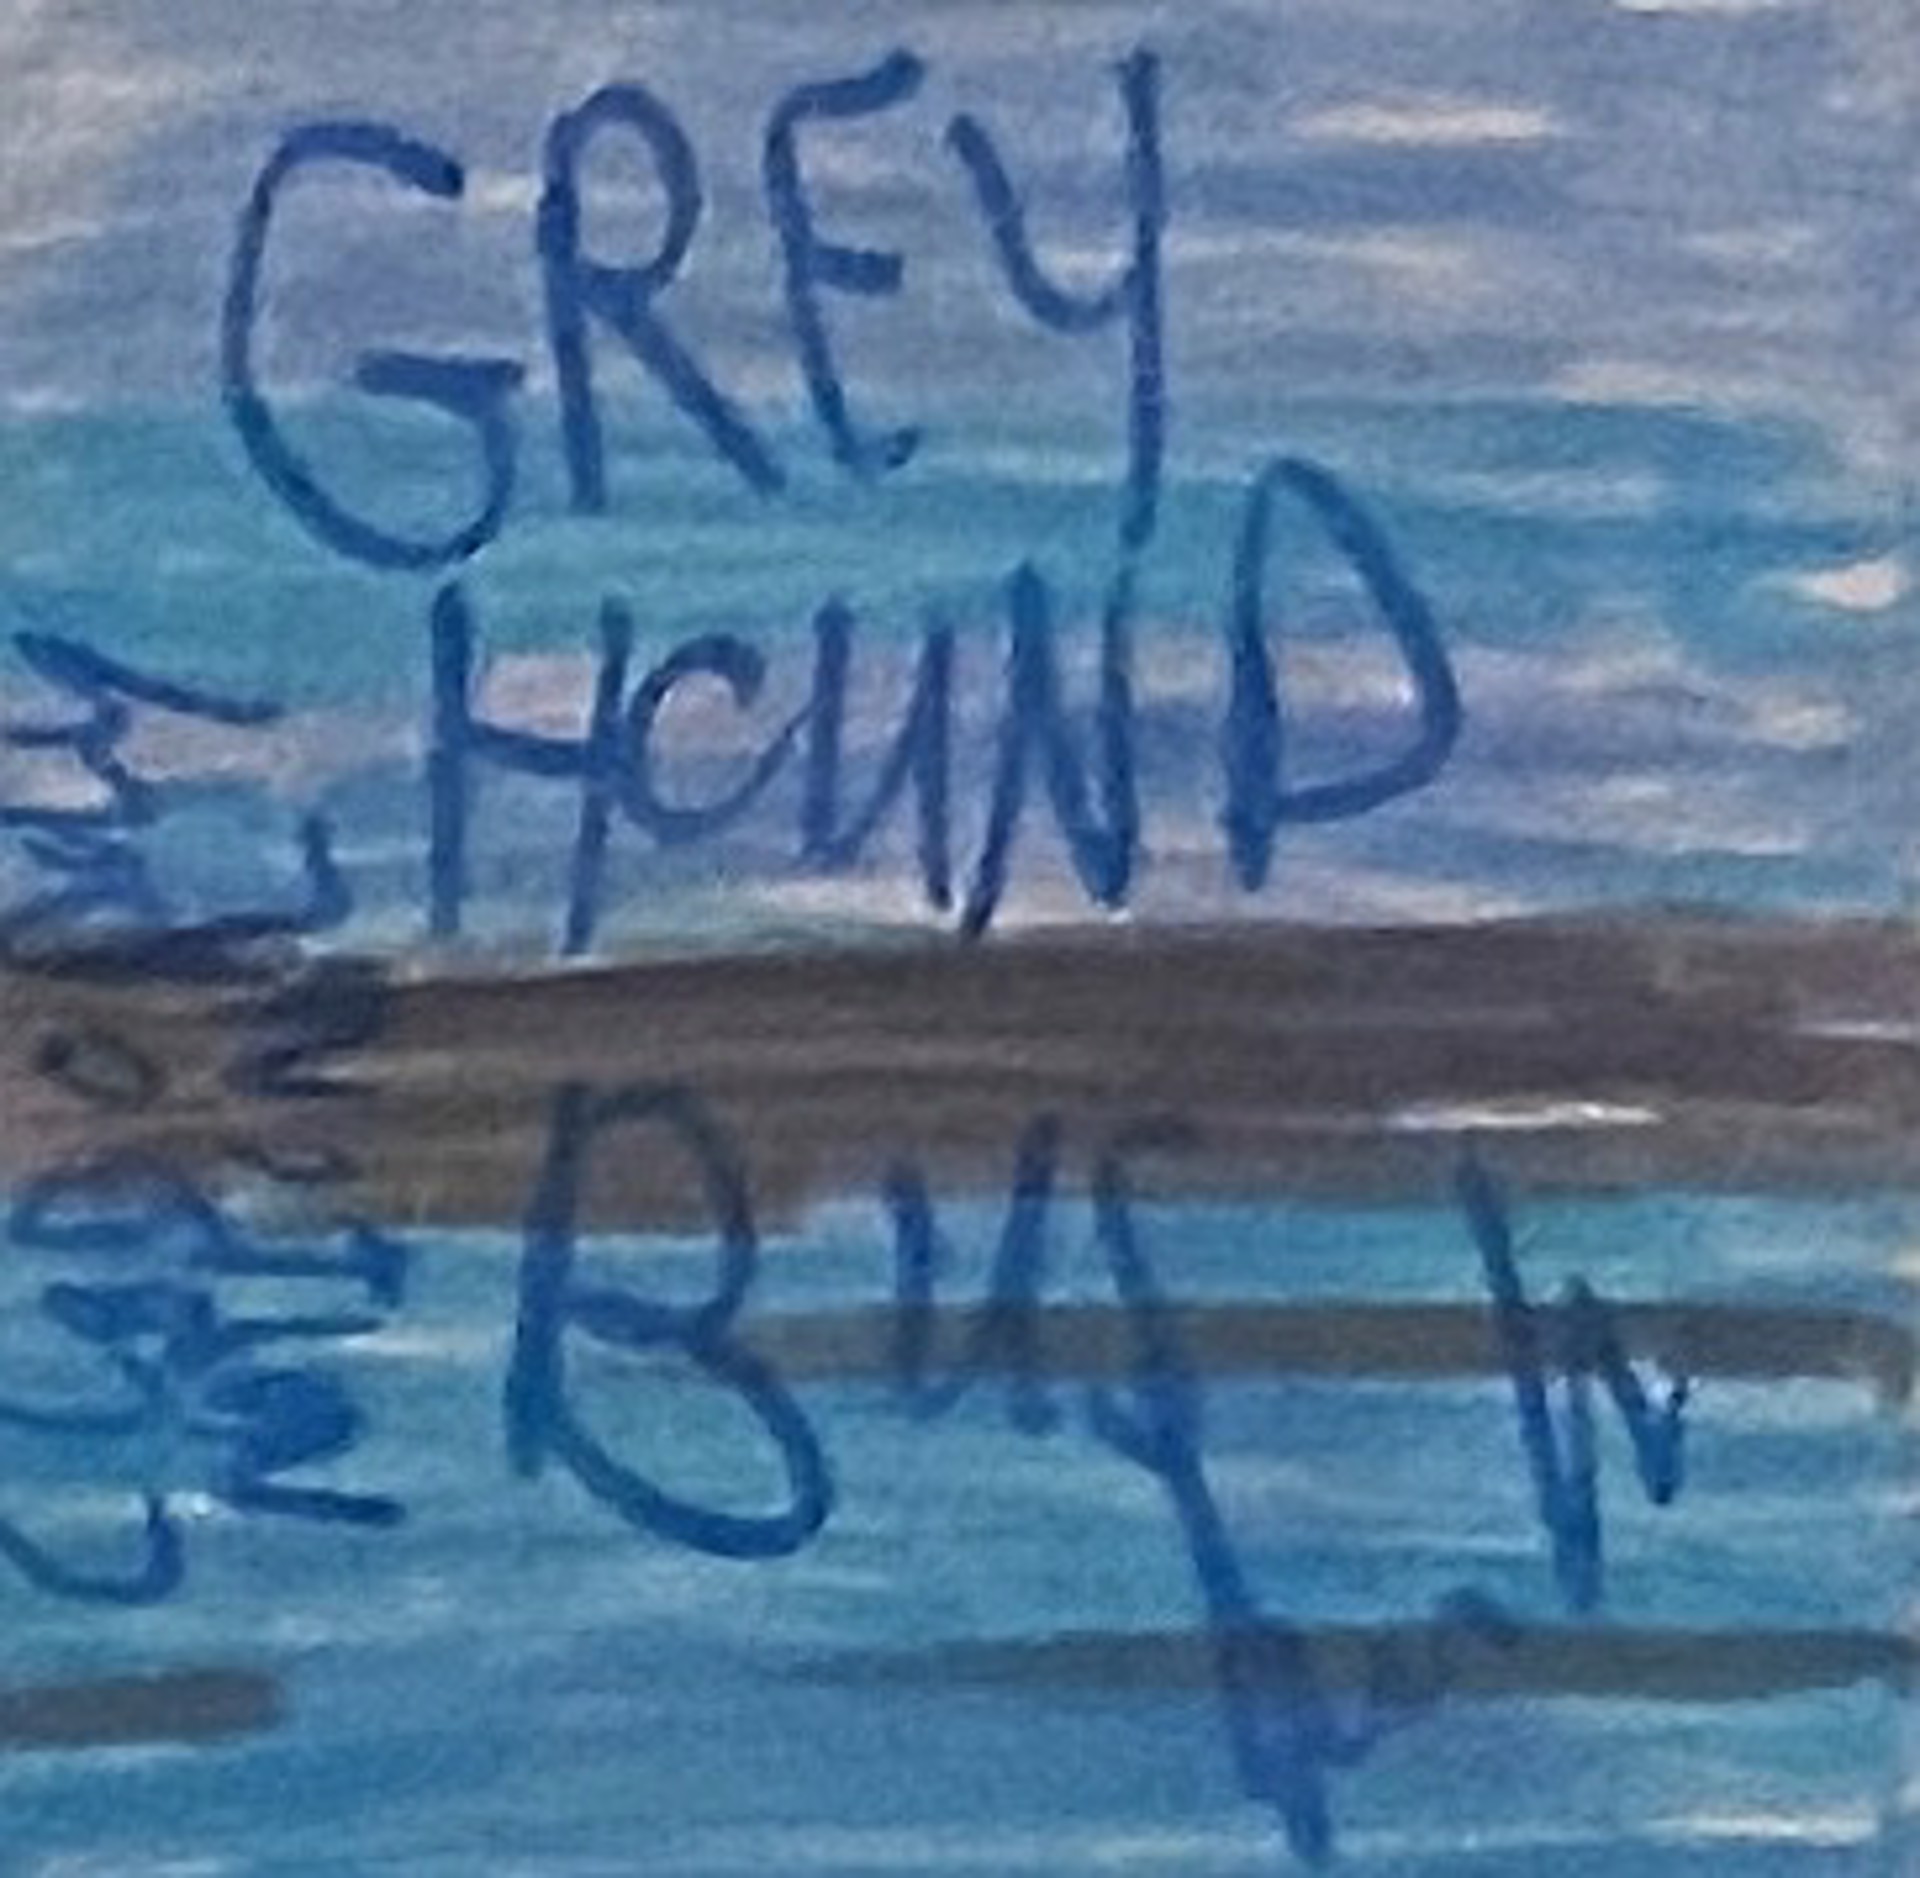 Greyhound Bus by Judith Berman